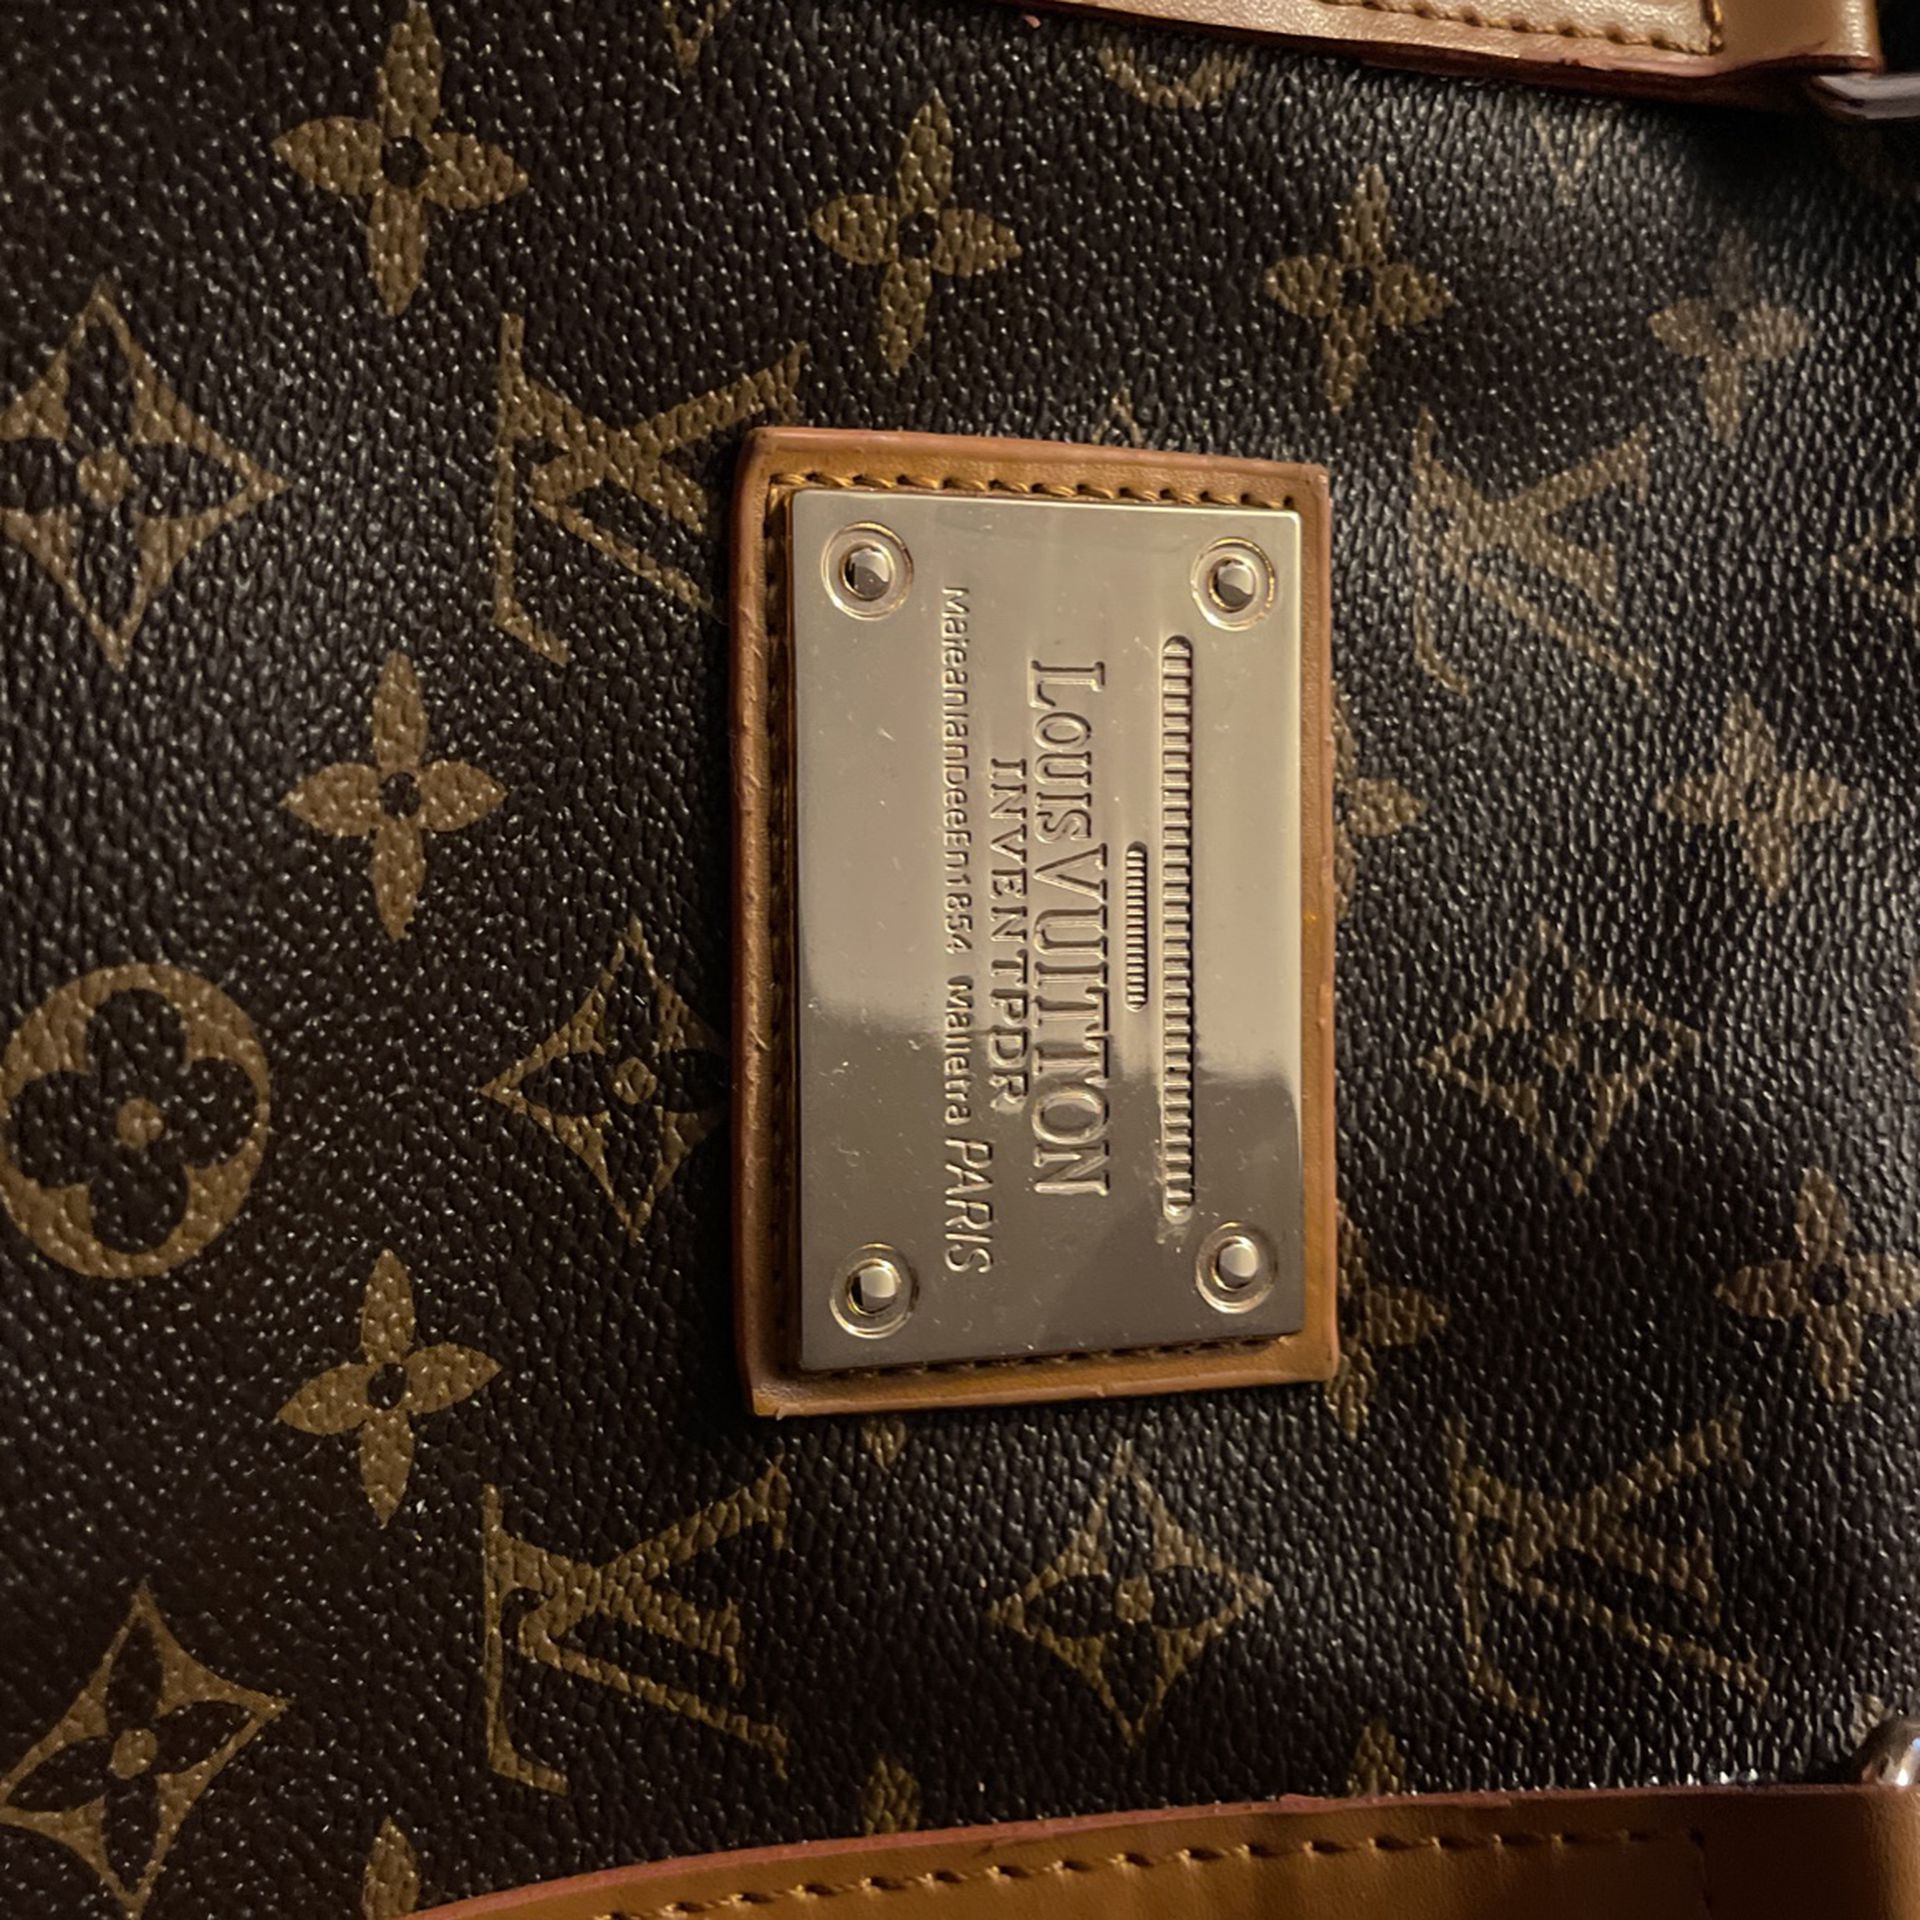 Paris - Louis Vuitton Shopping Bag, On our first trip to Pa…